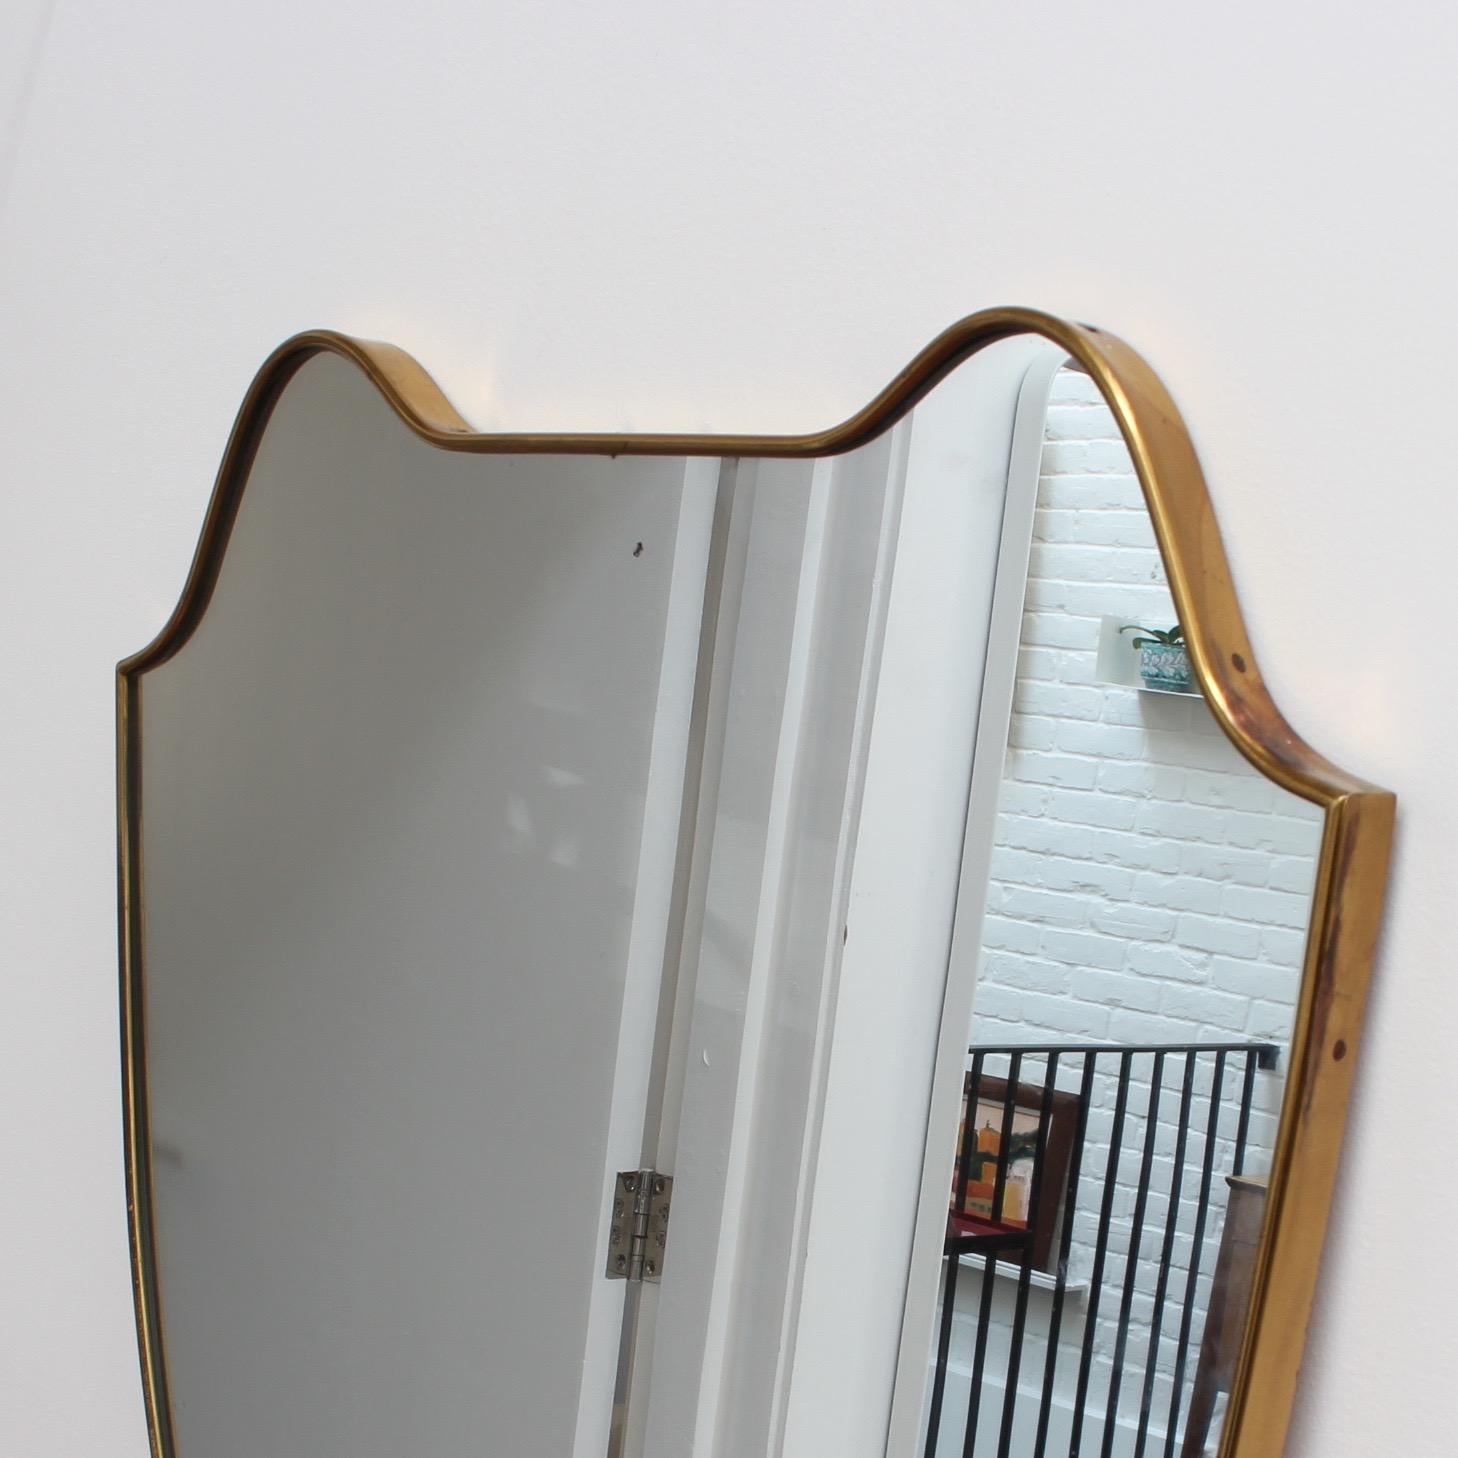 Midcentury Italian Wall Mirror with Brass Frame, circa 1950s 3